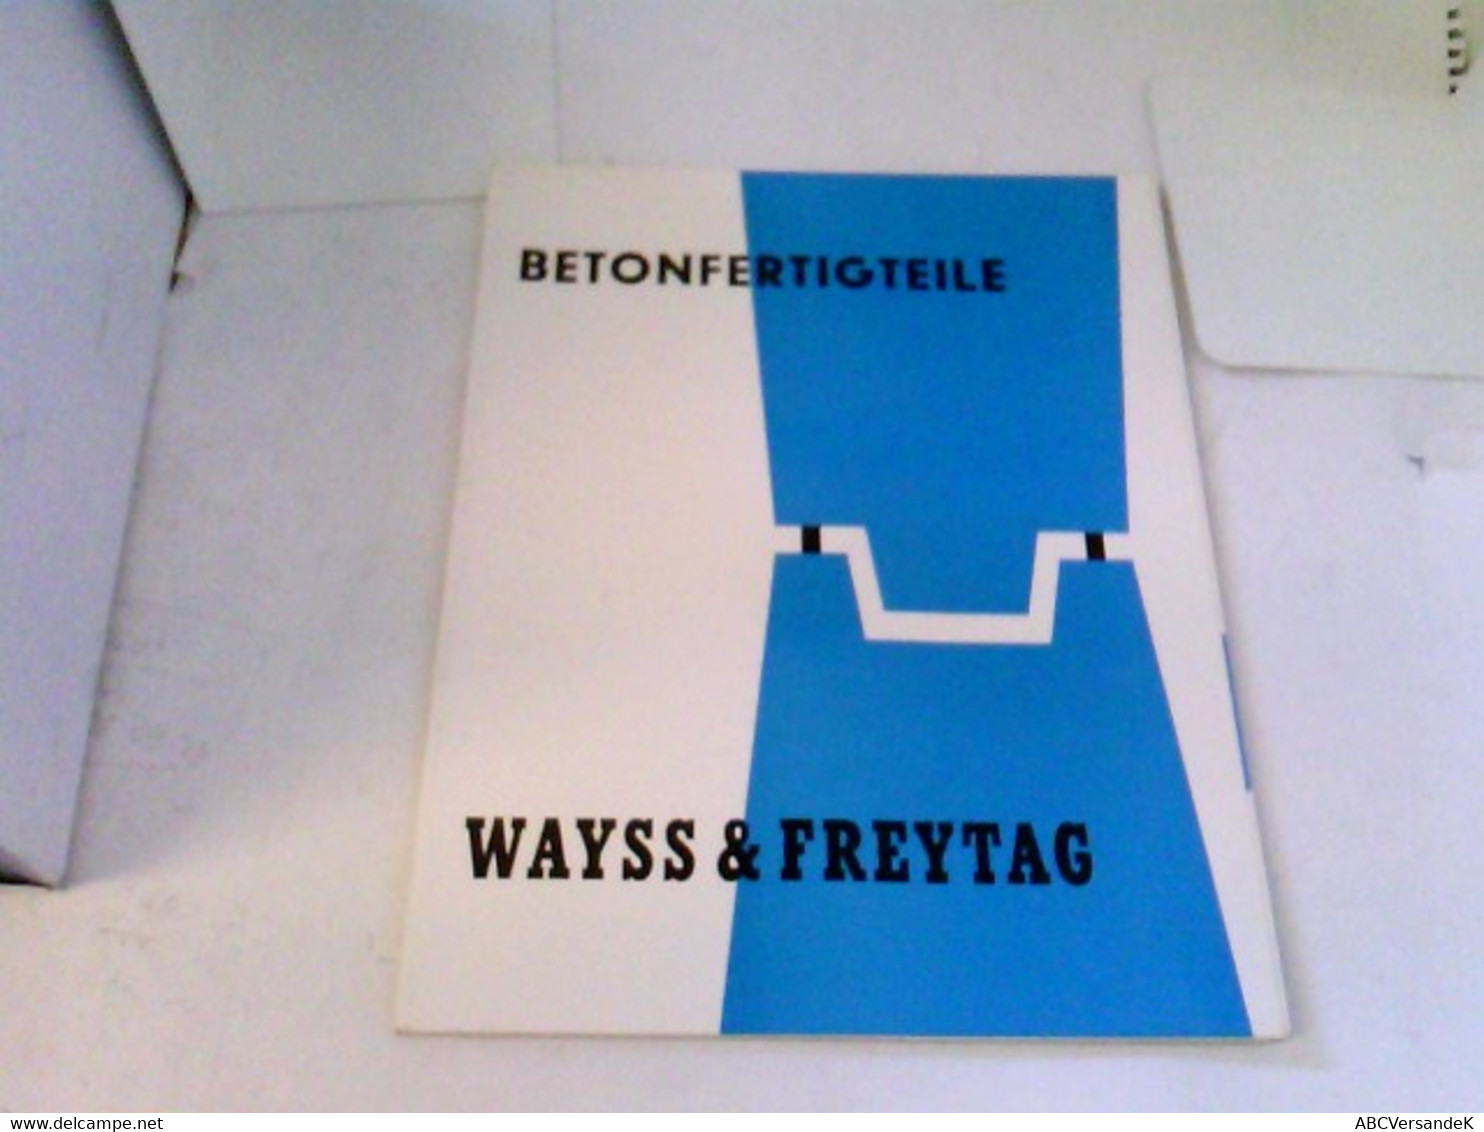 WAYSS & FREYTAG Betonfertigteile - Architecture